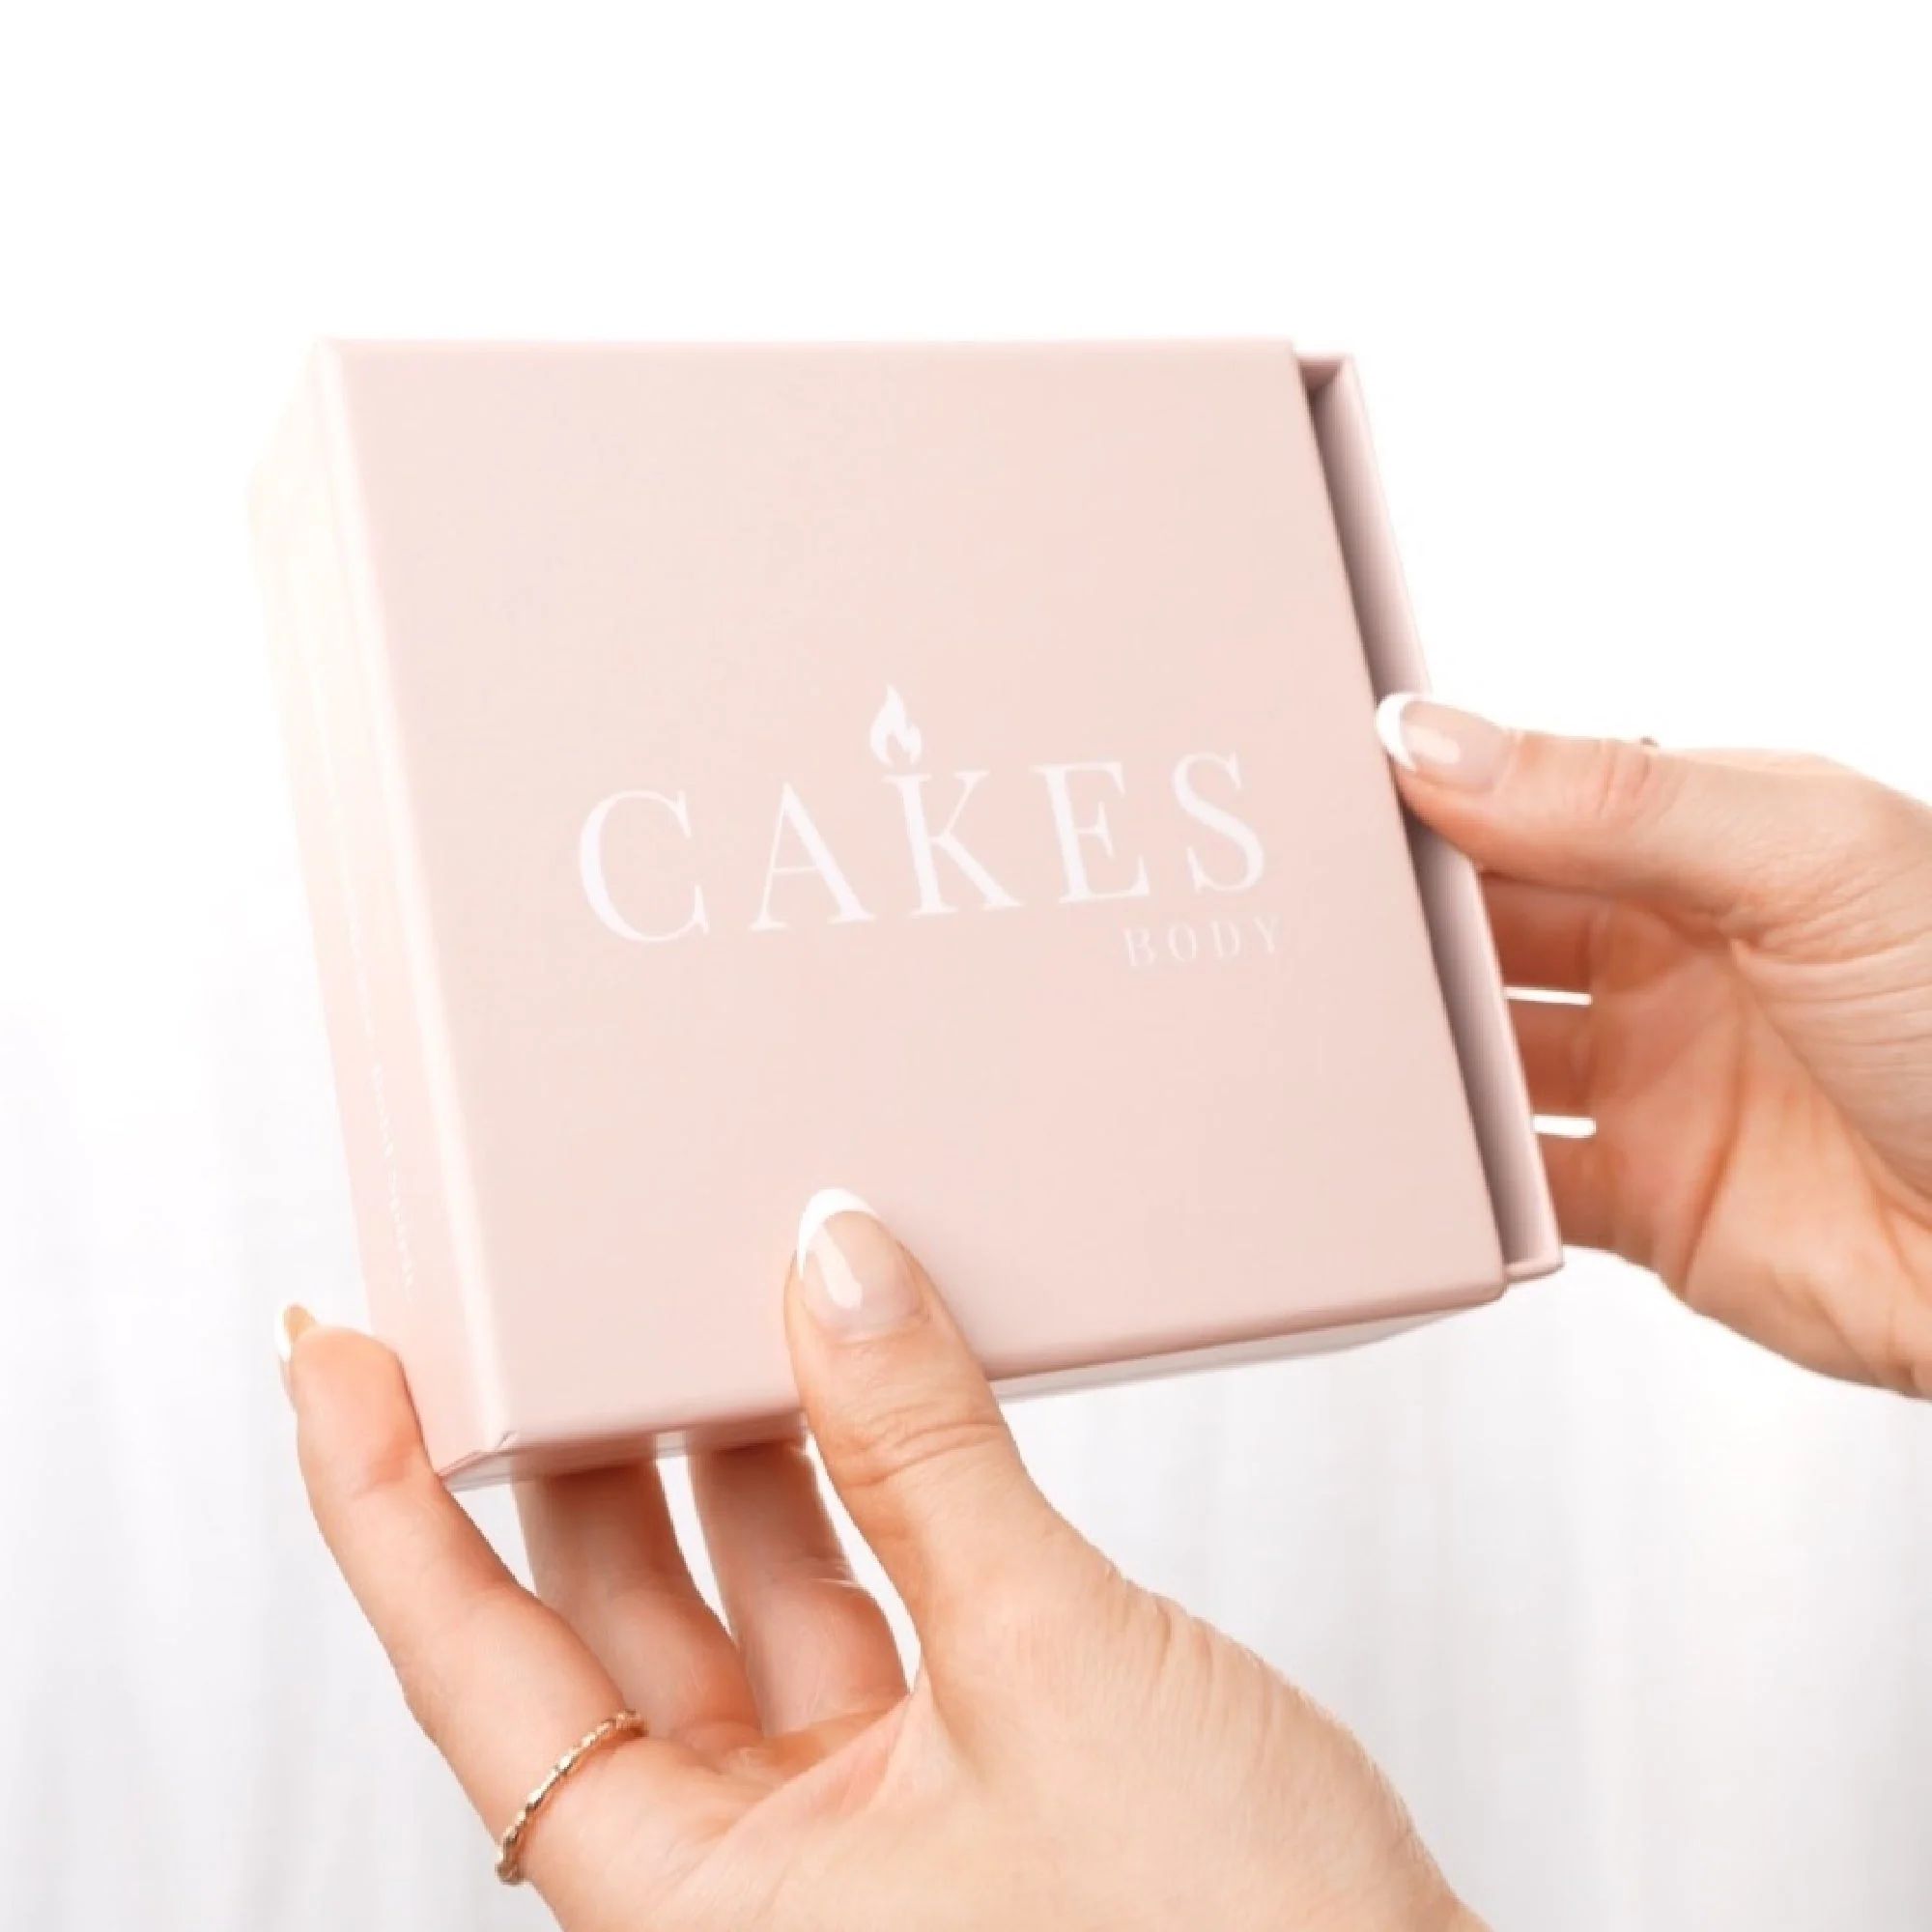 CAKES | CAKES body